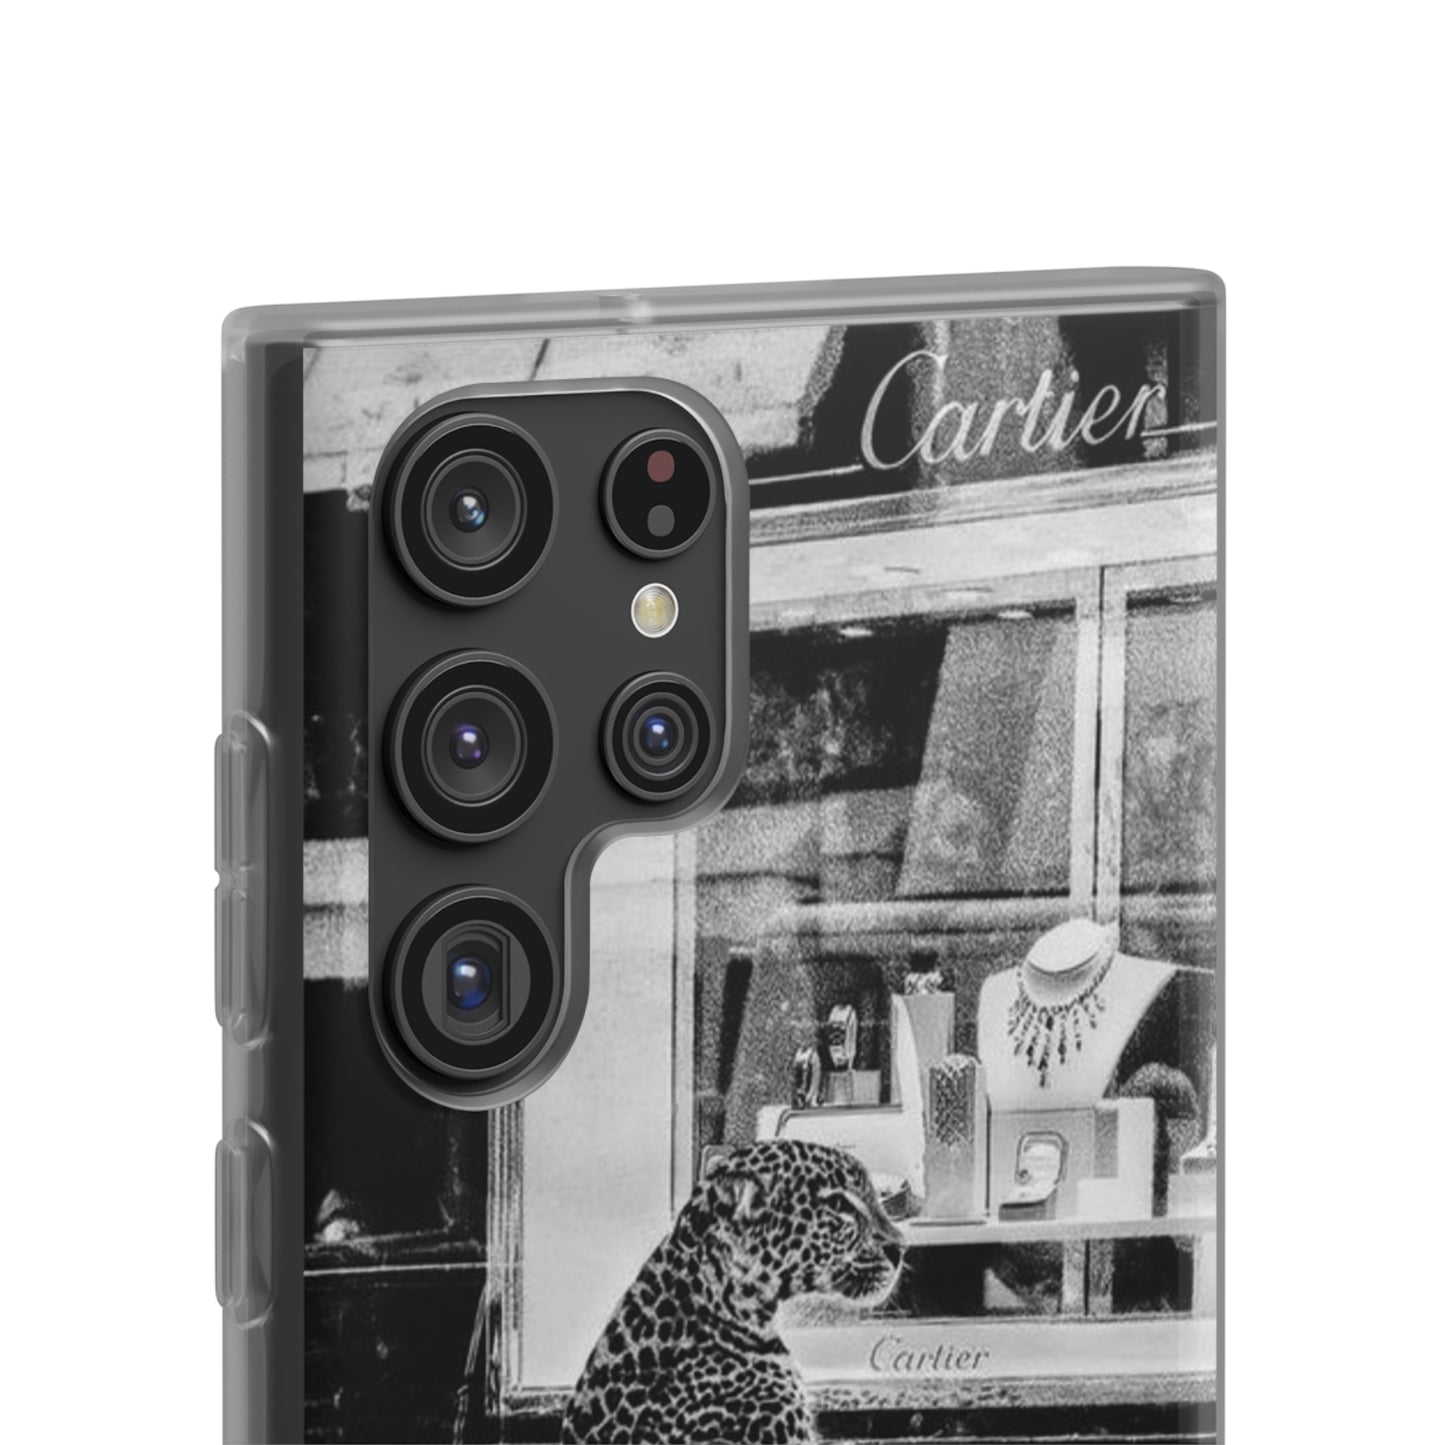 Cartier Store Cases